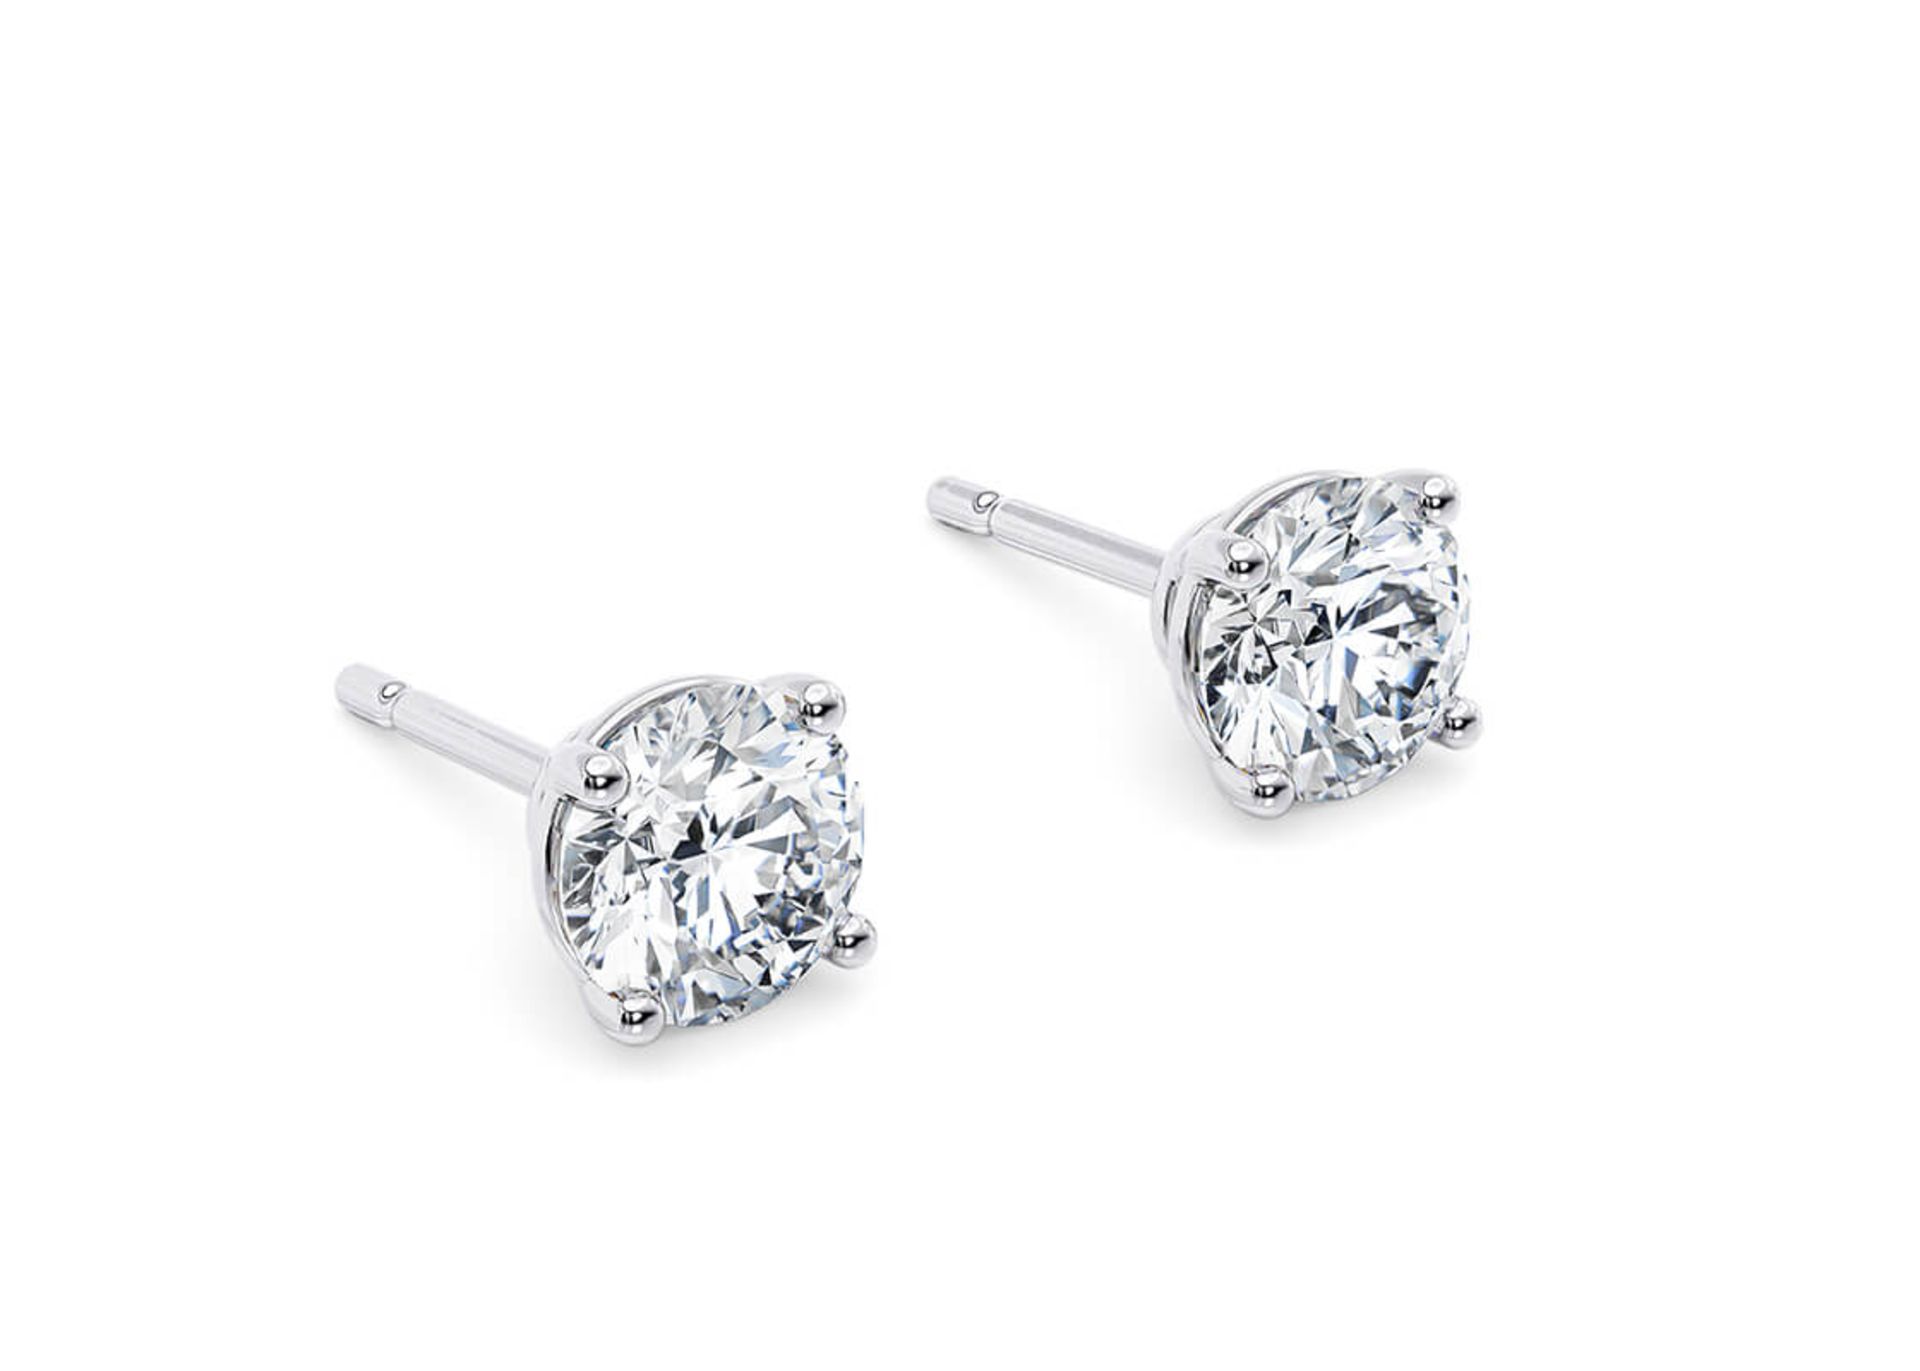 Round Brilliant Cut 3.00 Carat Diamond Earrings Set in 18kt White Gold - E Colour VVS Clarity - GIA - Image 2 of 3